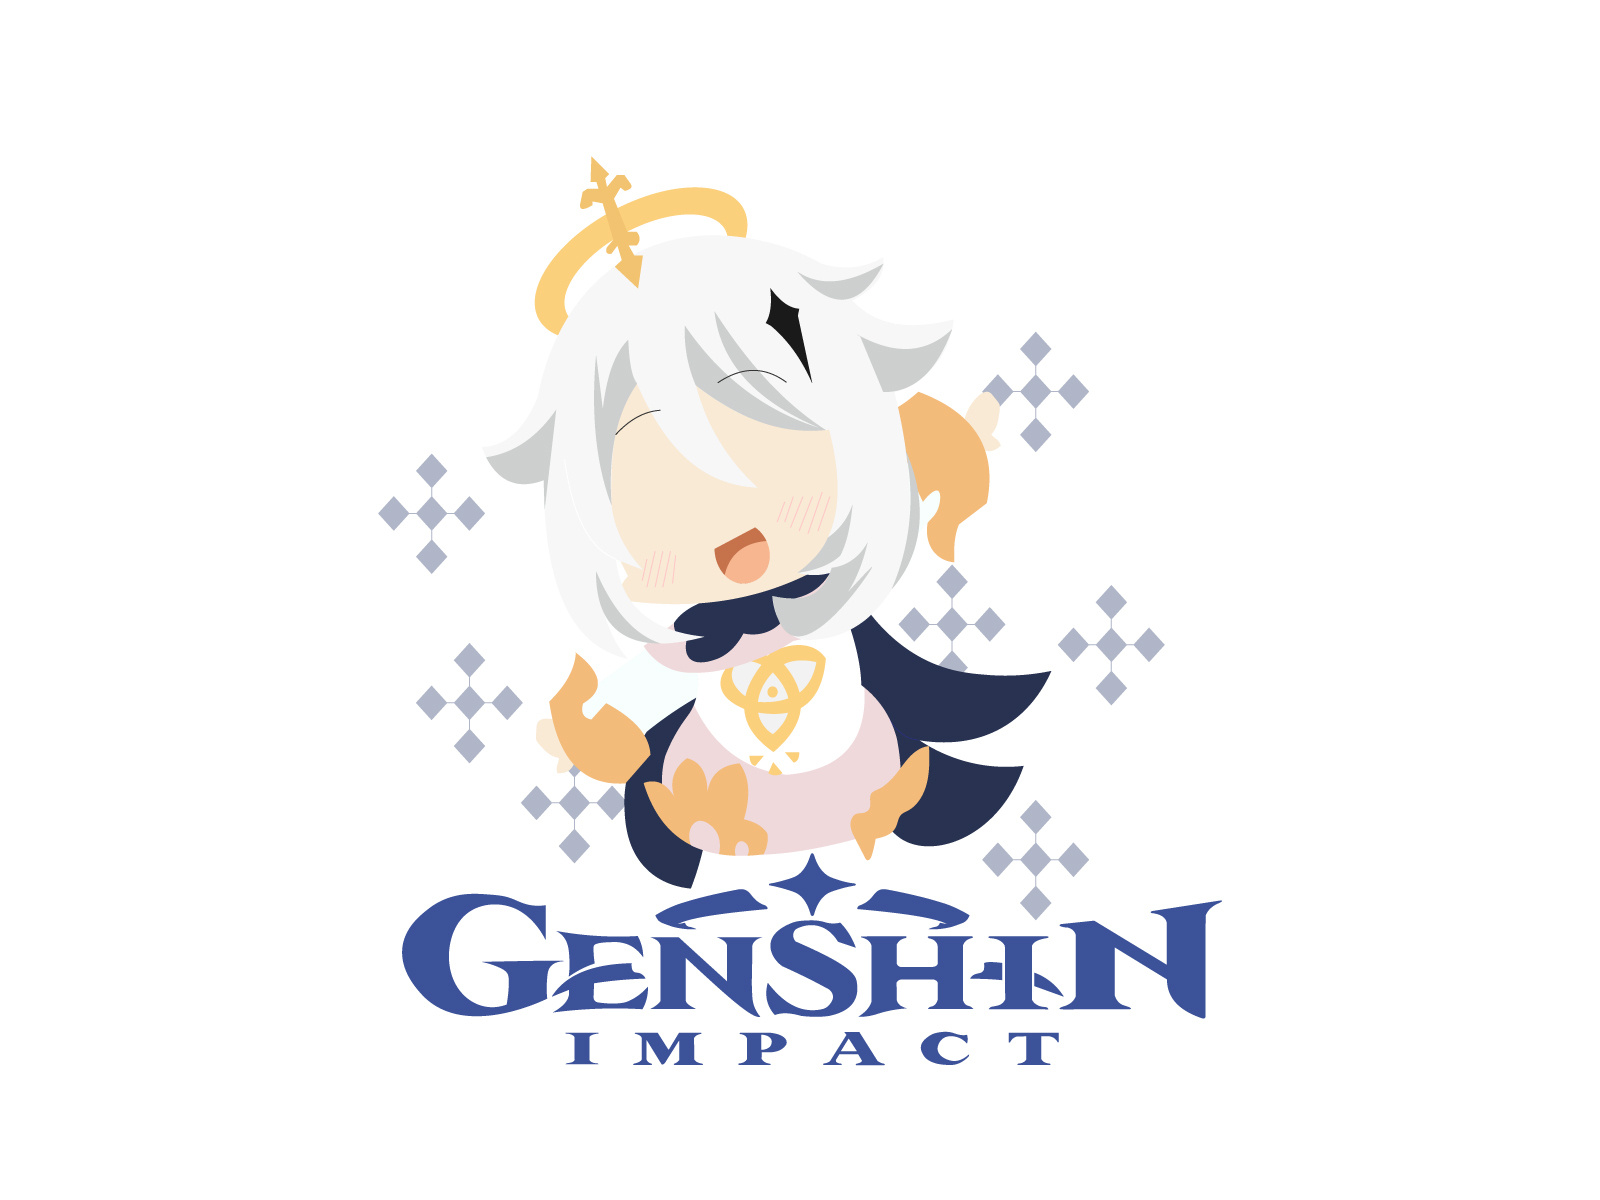 Genshin impact logo paimon